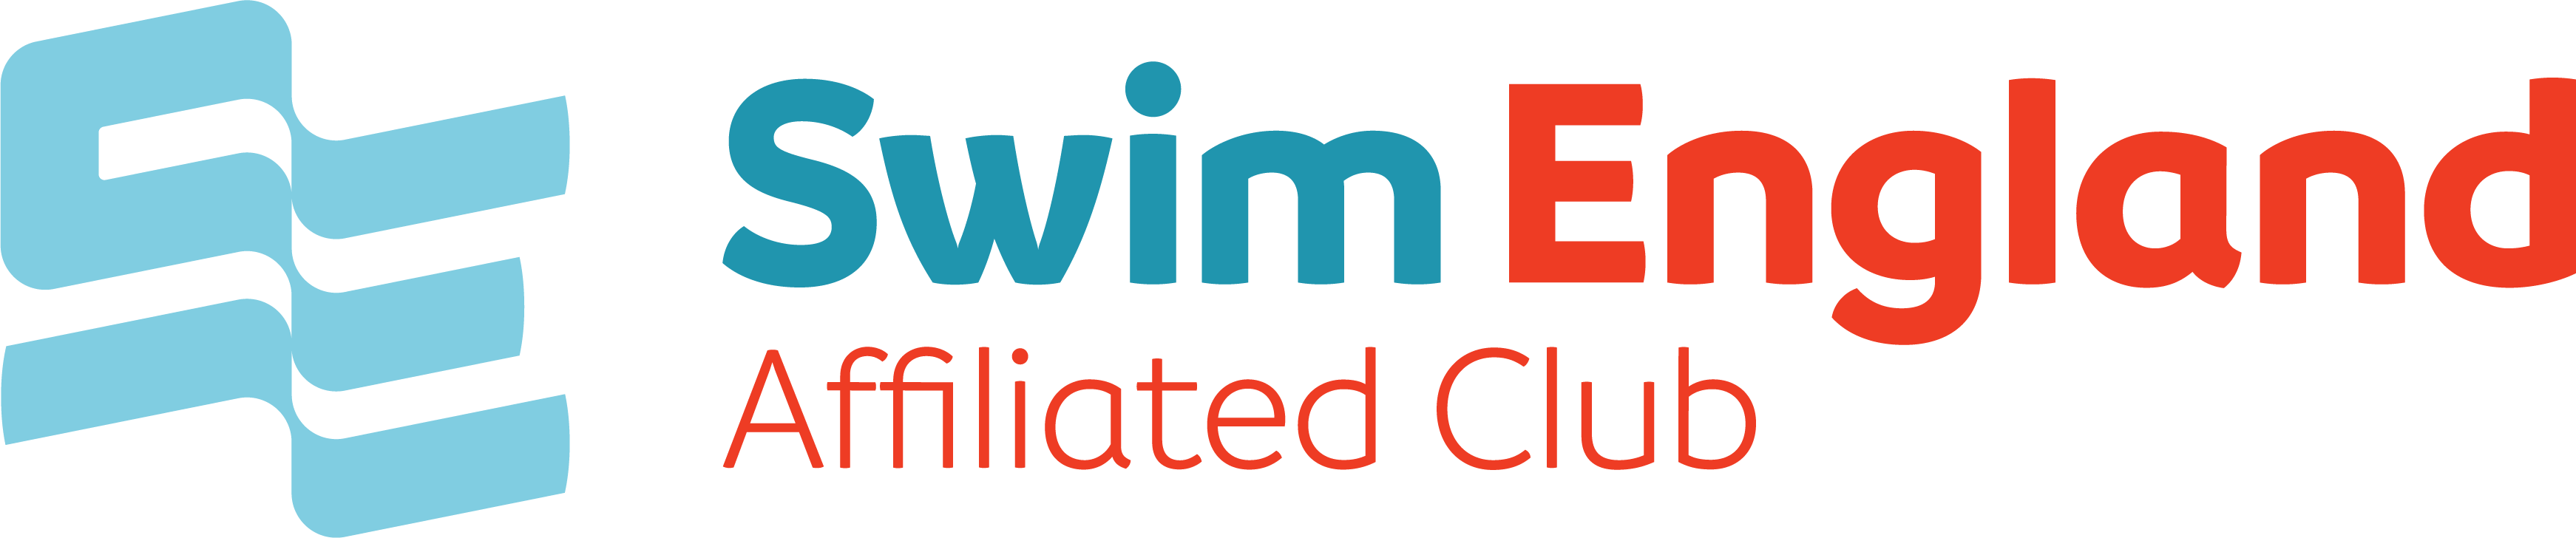 Category - Clipart - Swim England Affiliated Club (3484x728)